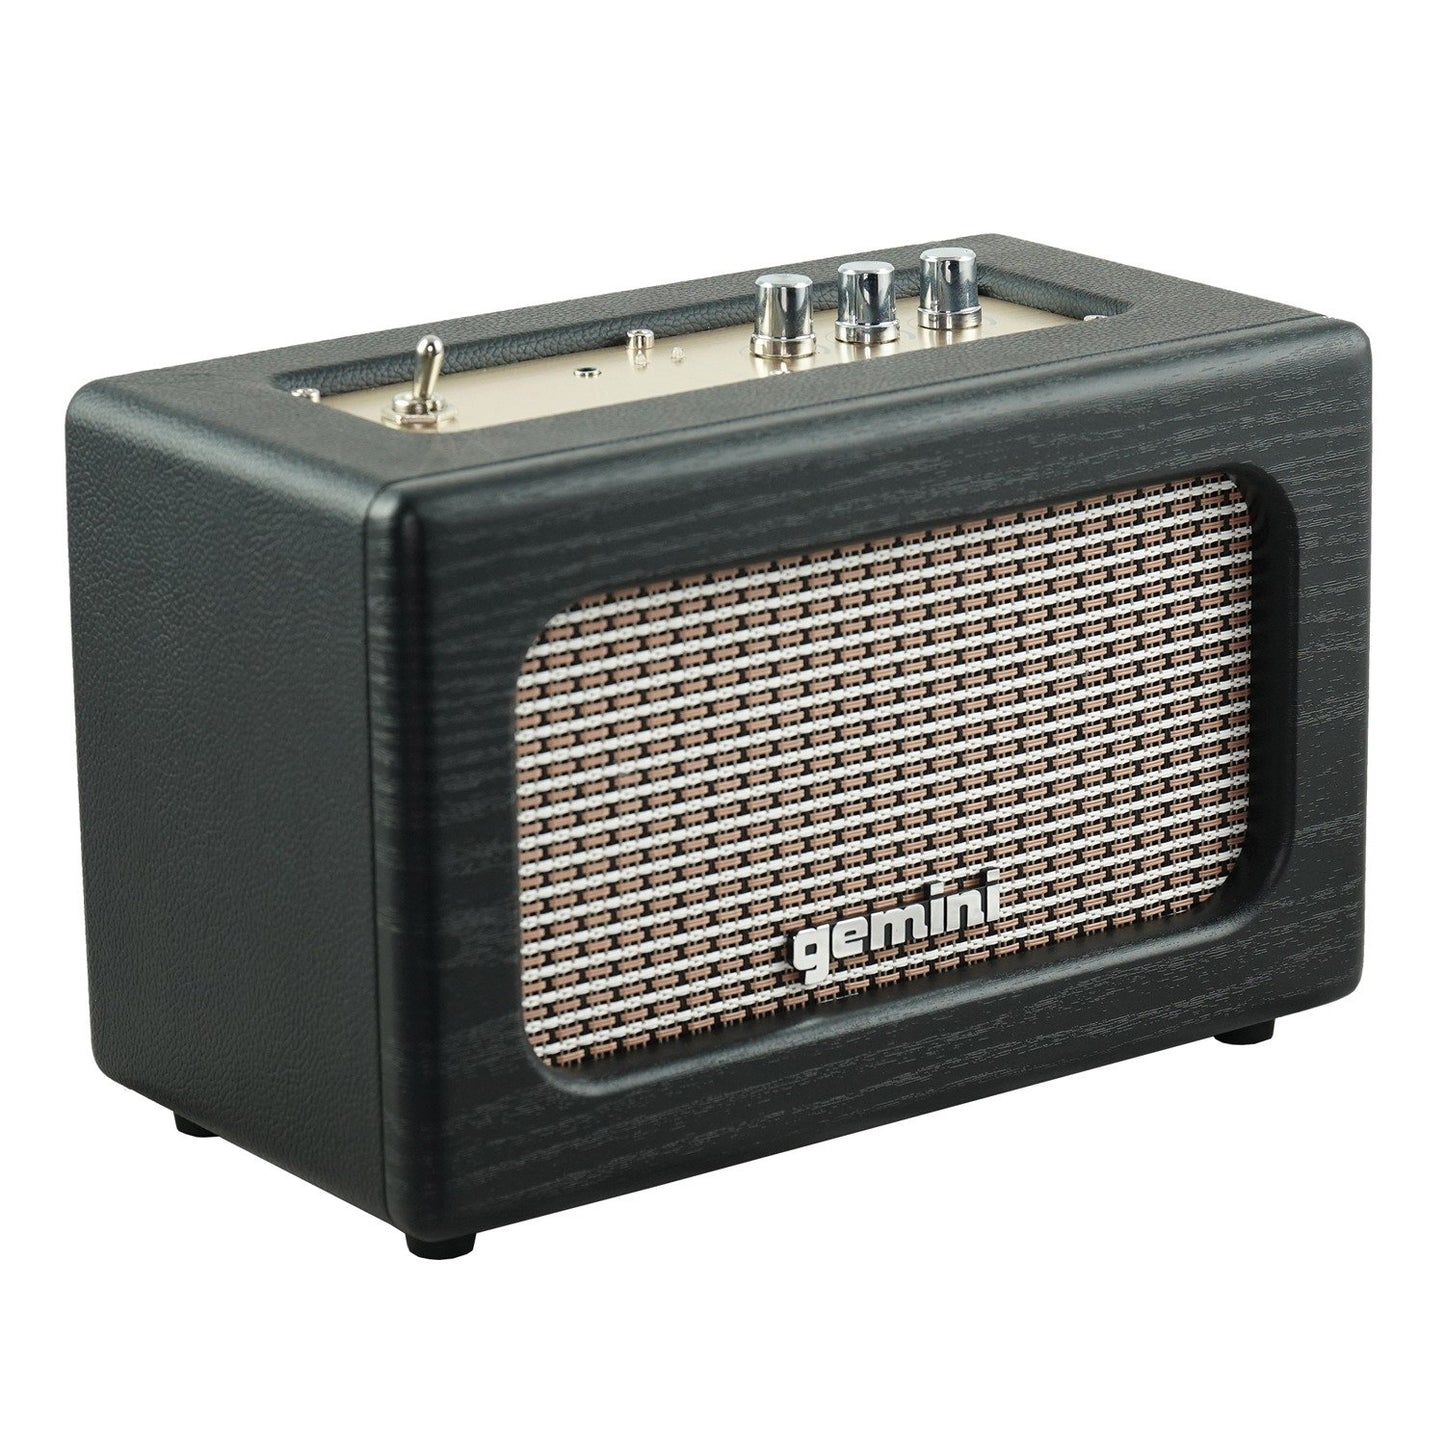 Gemini GTR-100 Portable Bluetooth Speaker